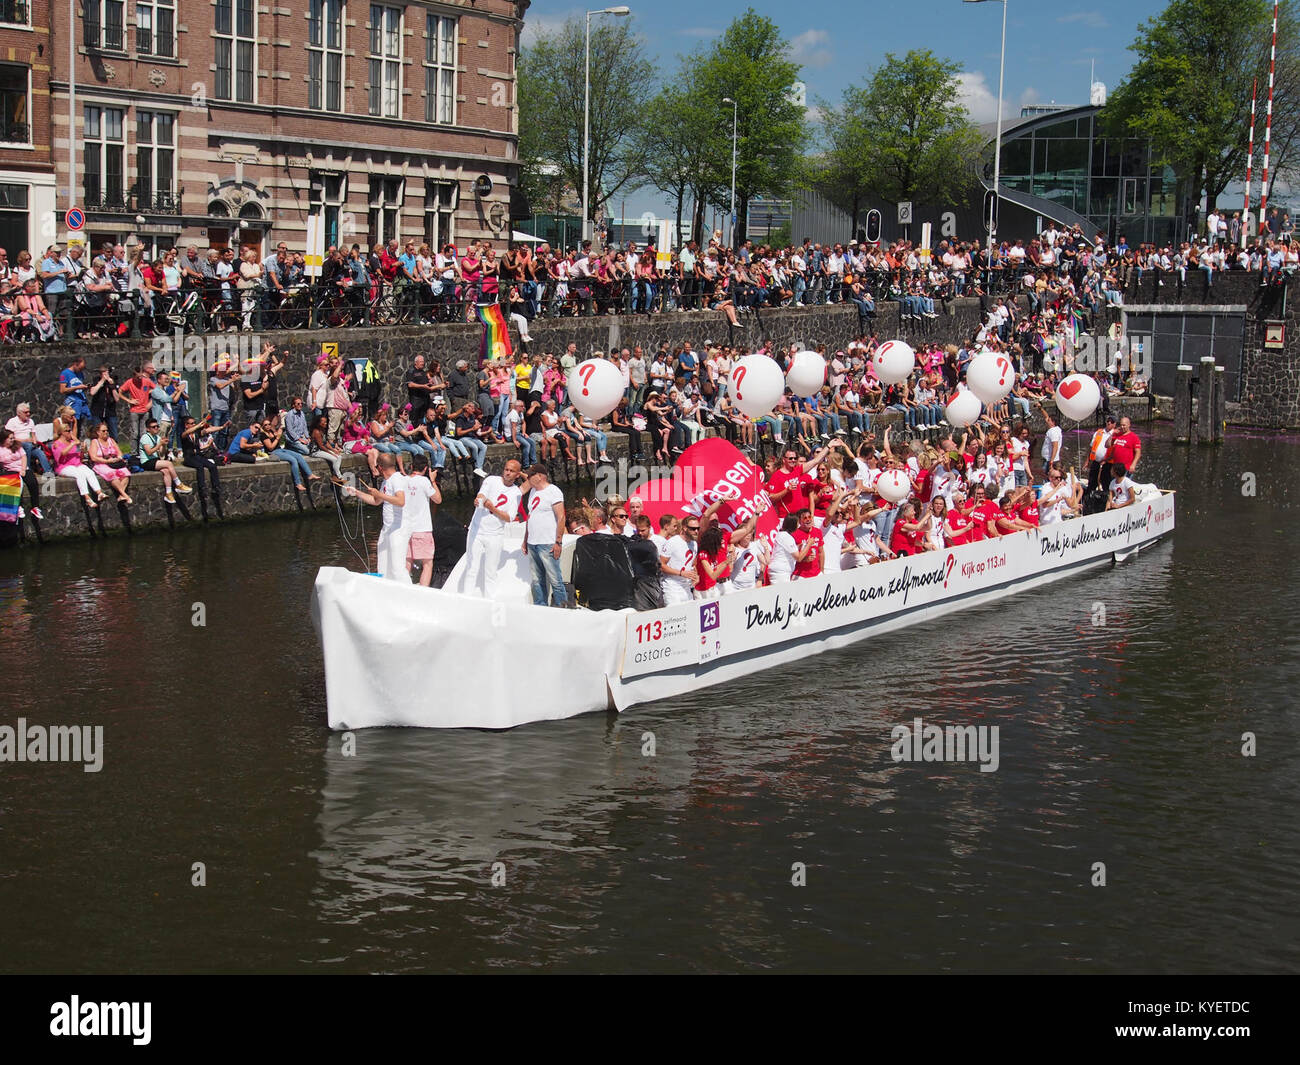 Voile 25113 DEnk je wel k aan zelfmoord, Canal Amsterdam 2017 Parade foto 2 Banque D'Images